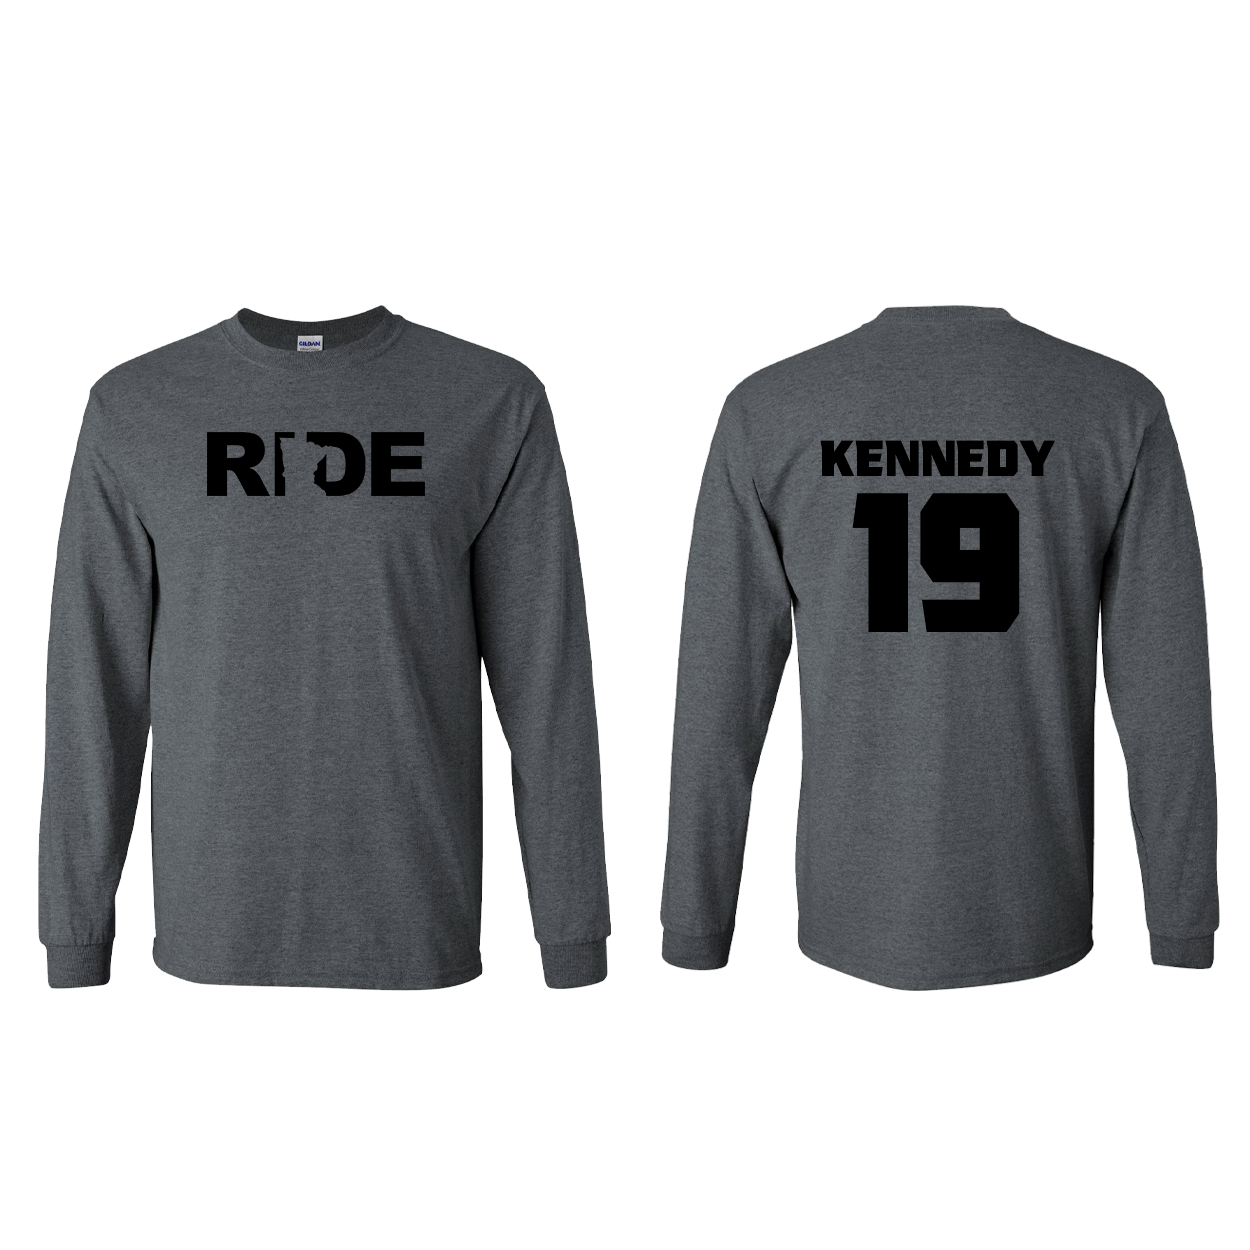 FXR BMX Race Team Classic Athlete Support Long Sleeve Shirt KENNEDY #19 Dark Heather (Black Logo)